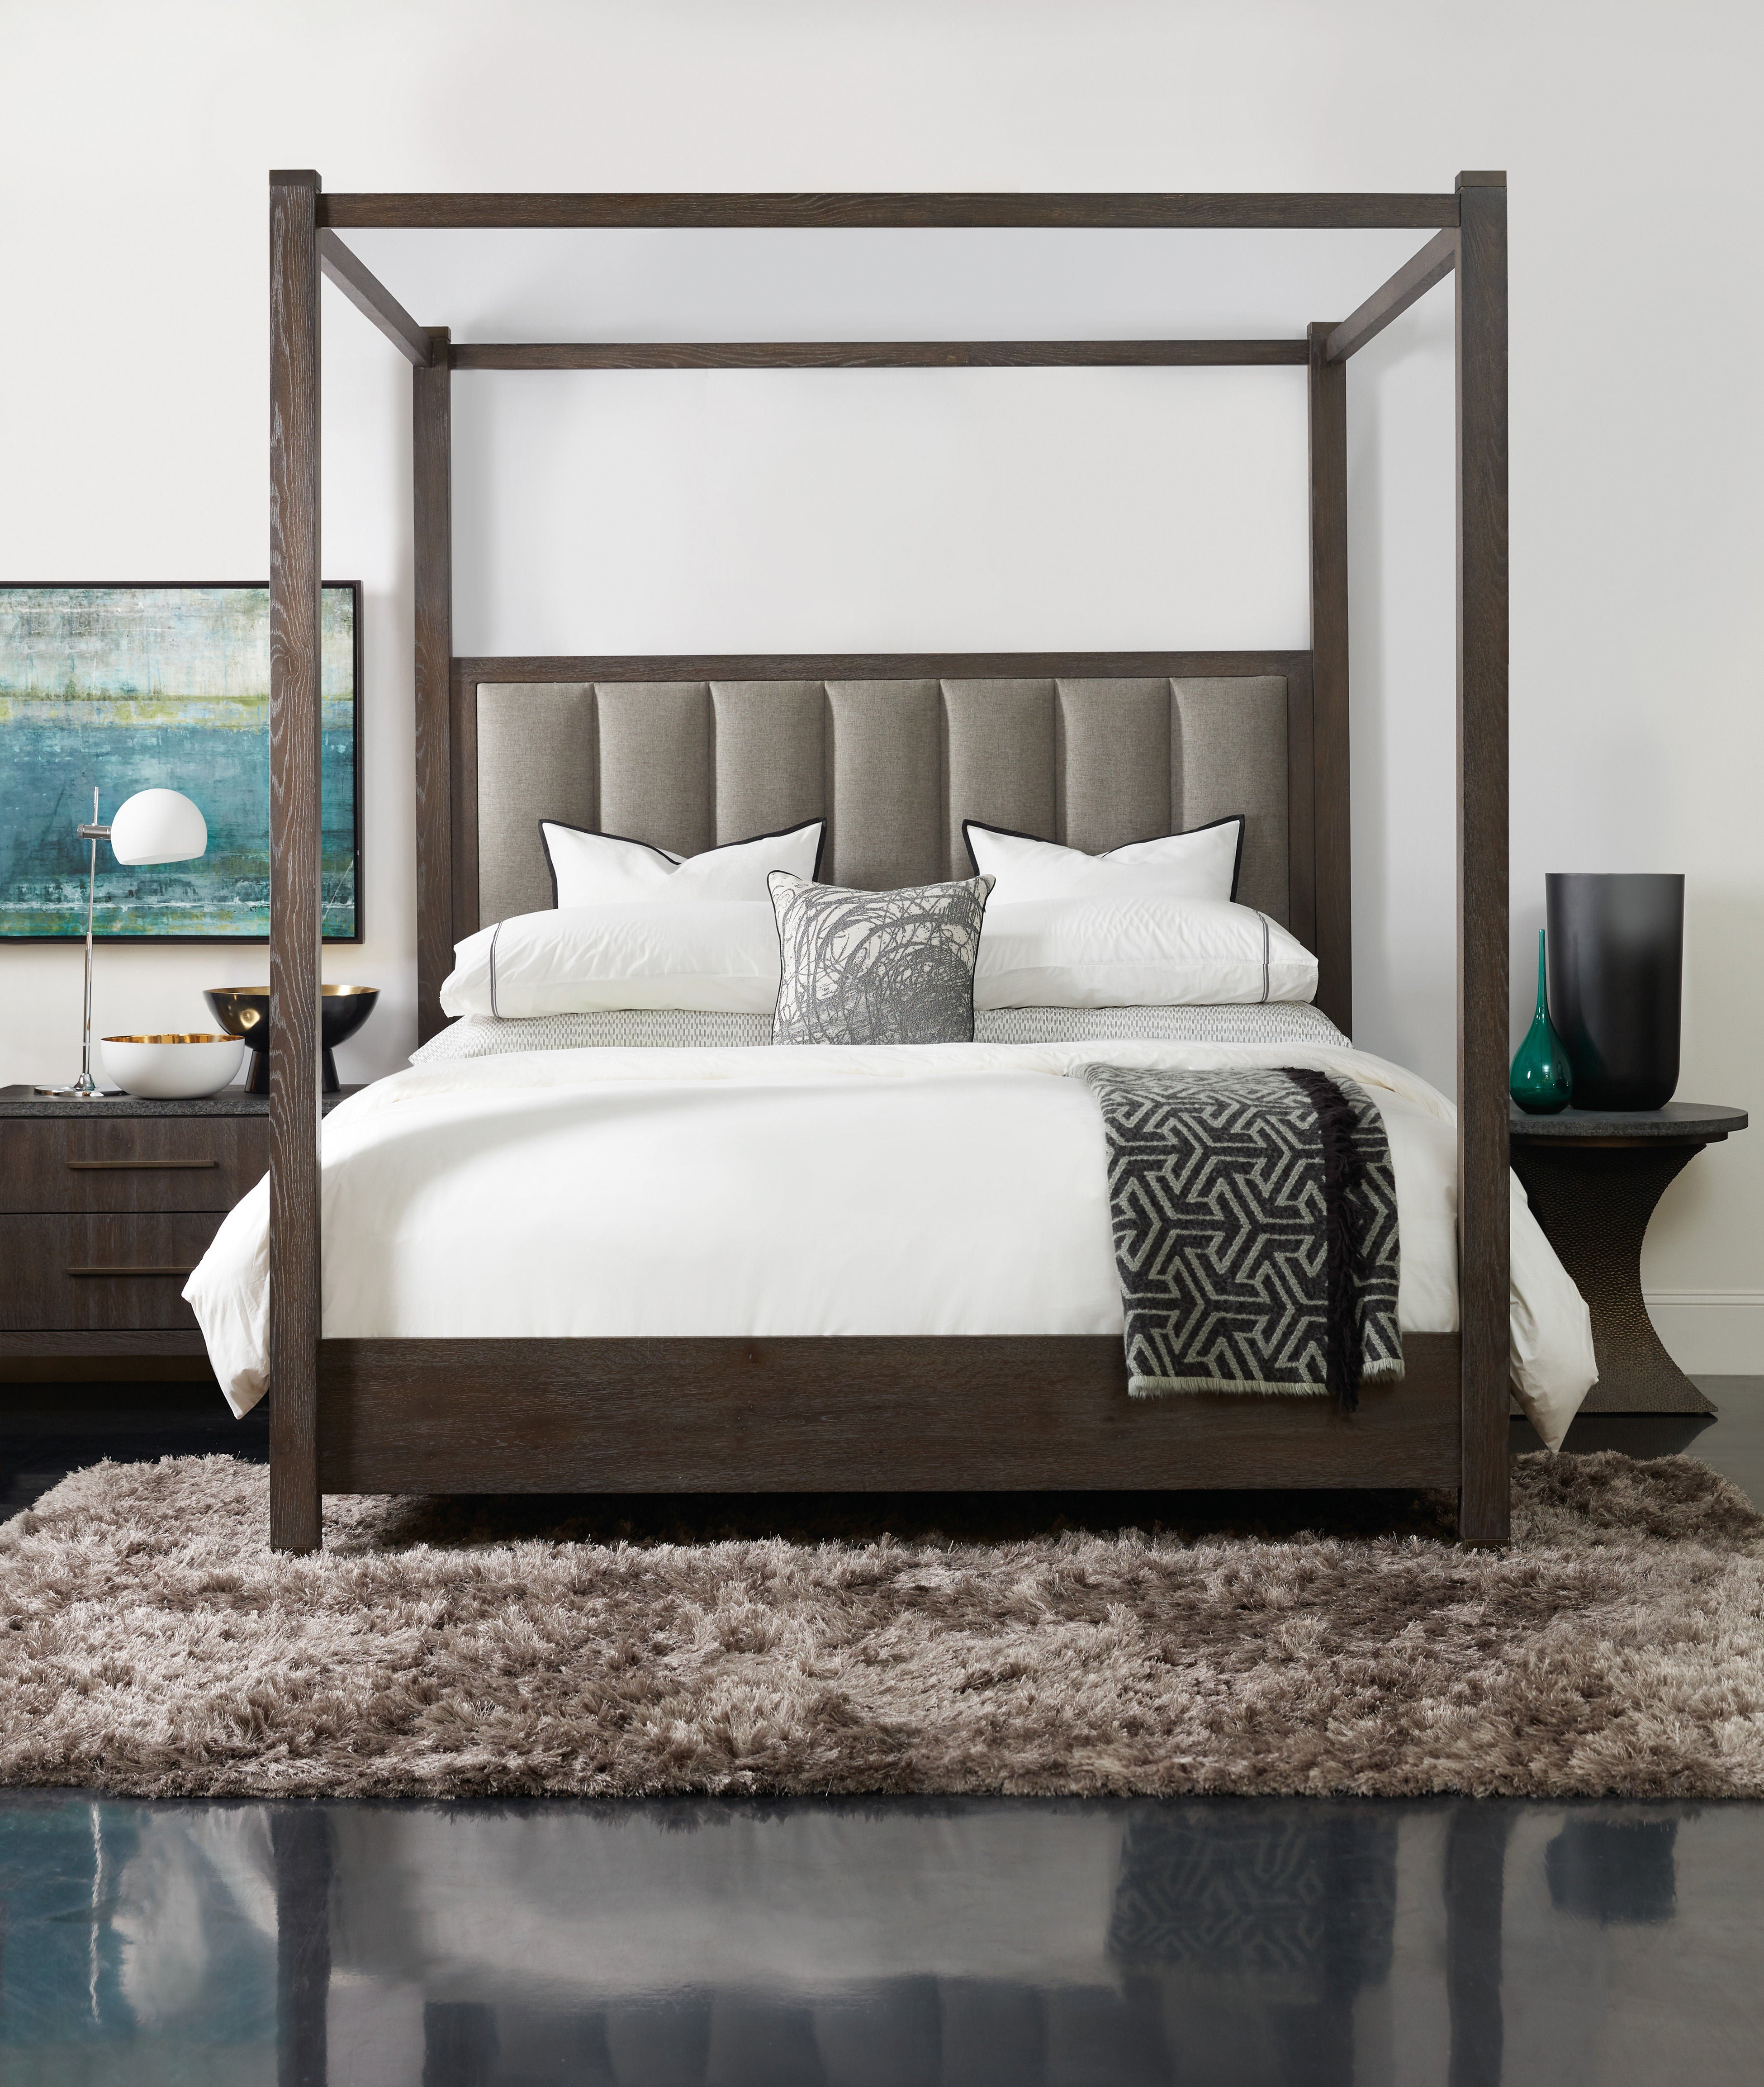 Hooker Furniture Bedroom Miramar Aventura Jackson Tall King Posts with Canopy